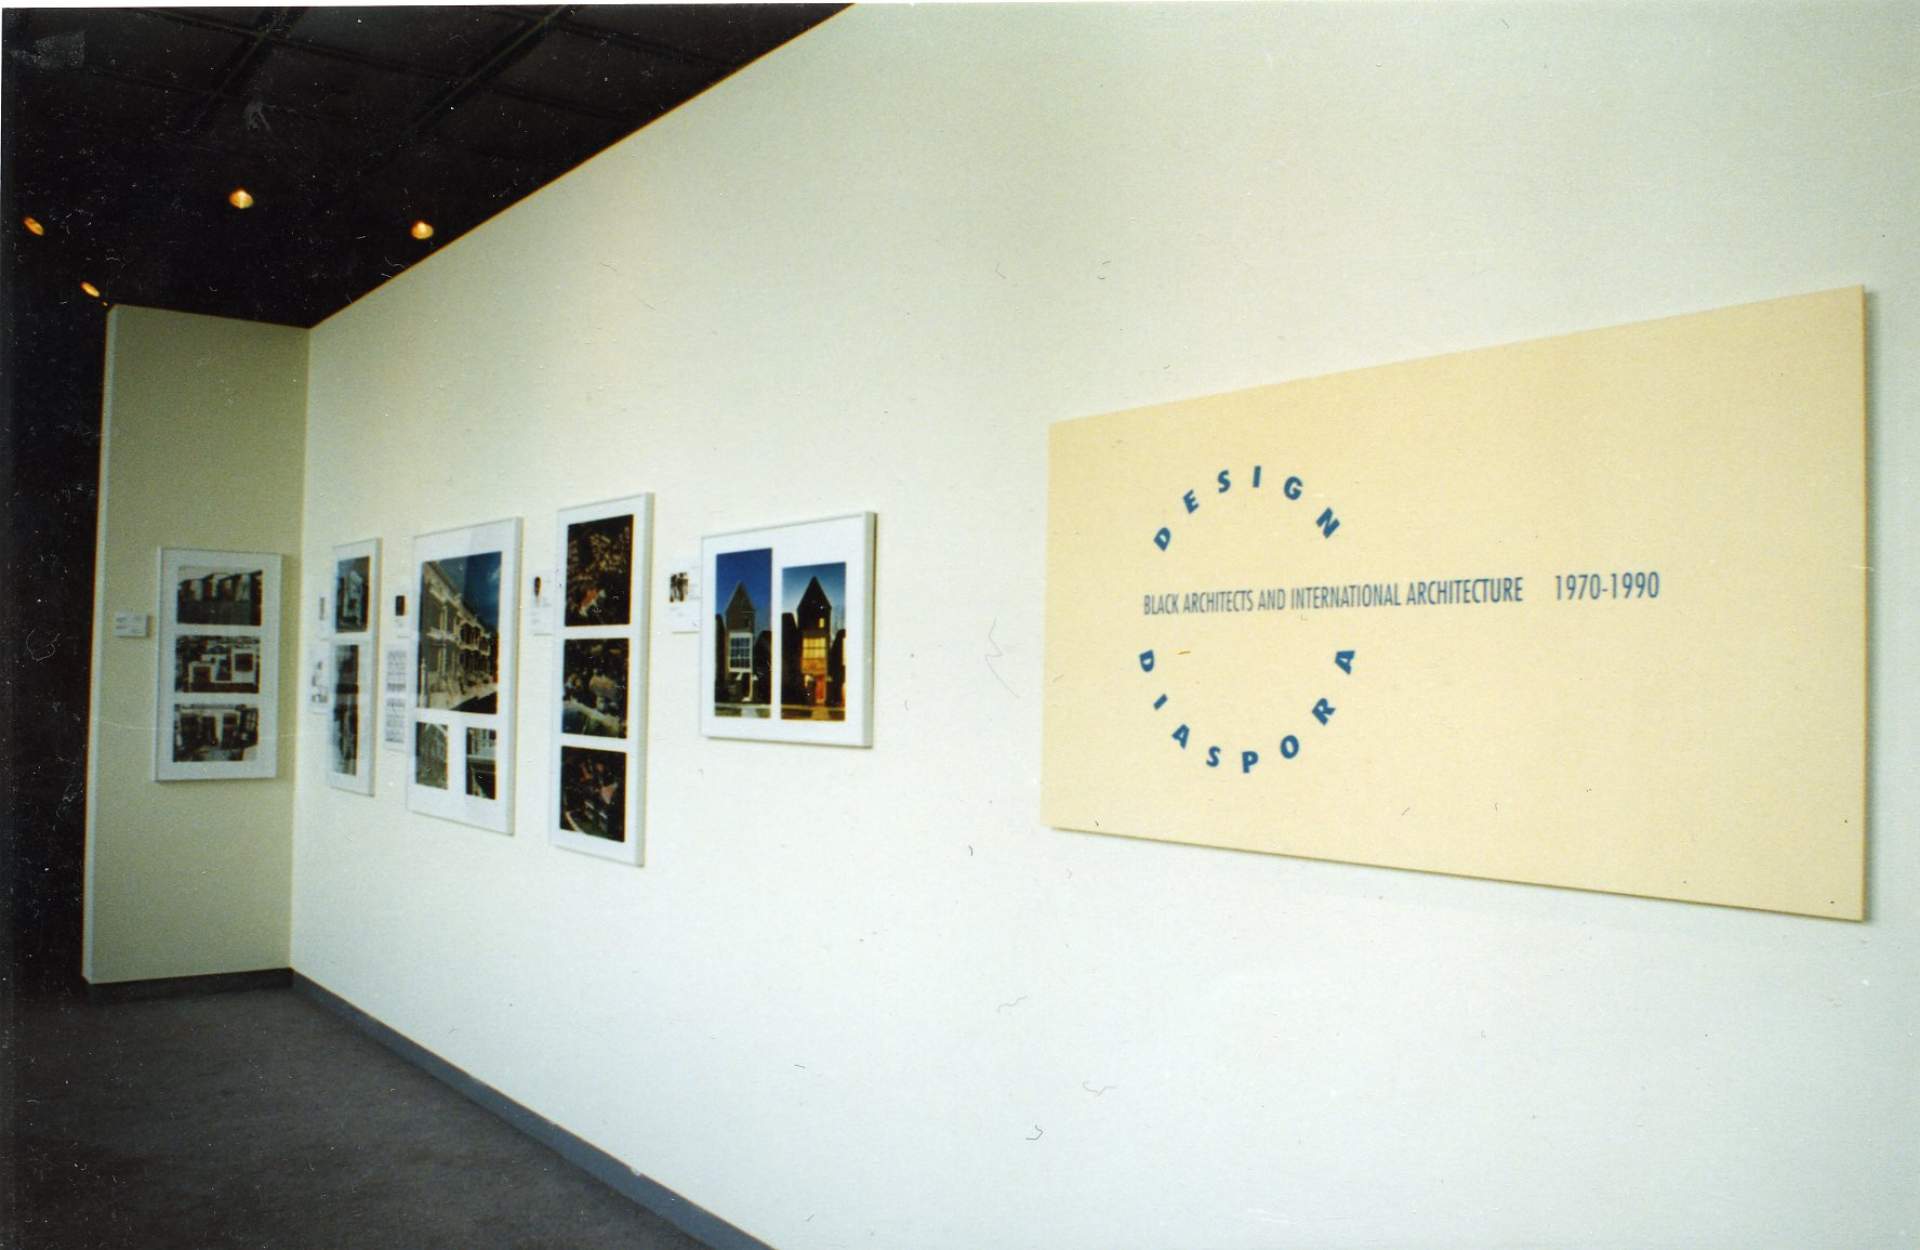 Design Diaspora: Black Architects and International Architecture 1970-1990 Installation